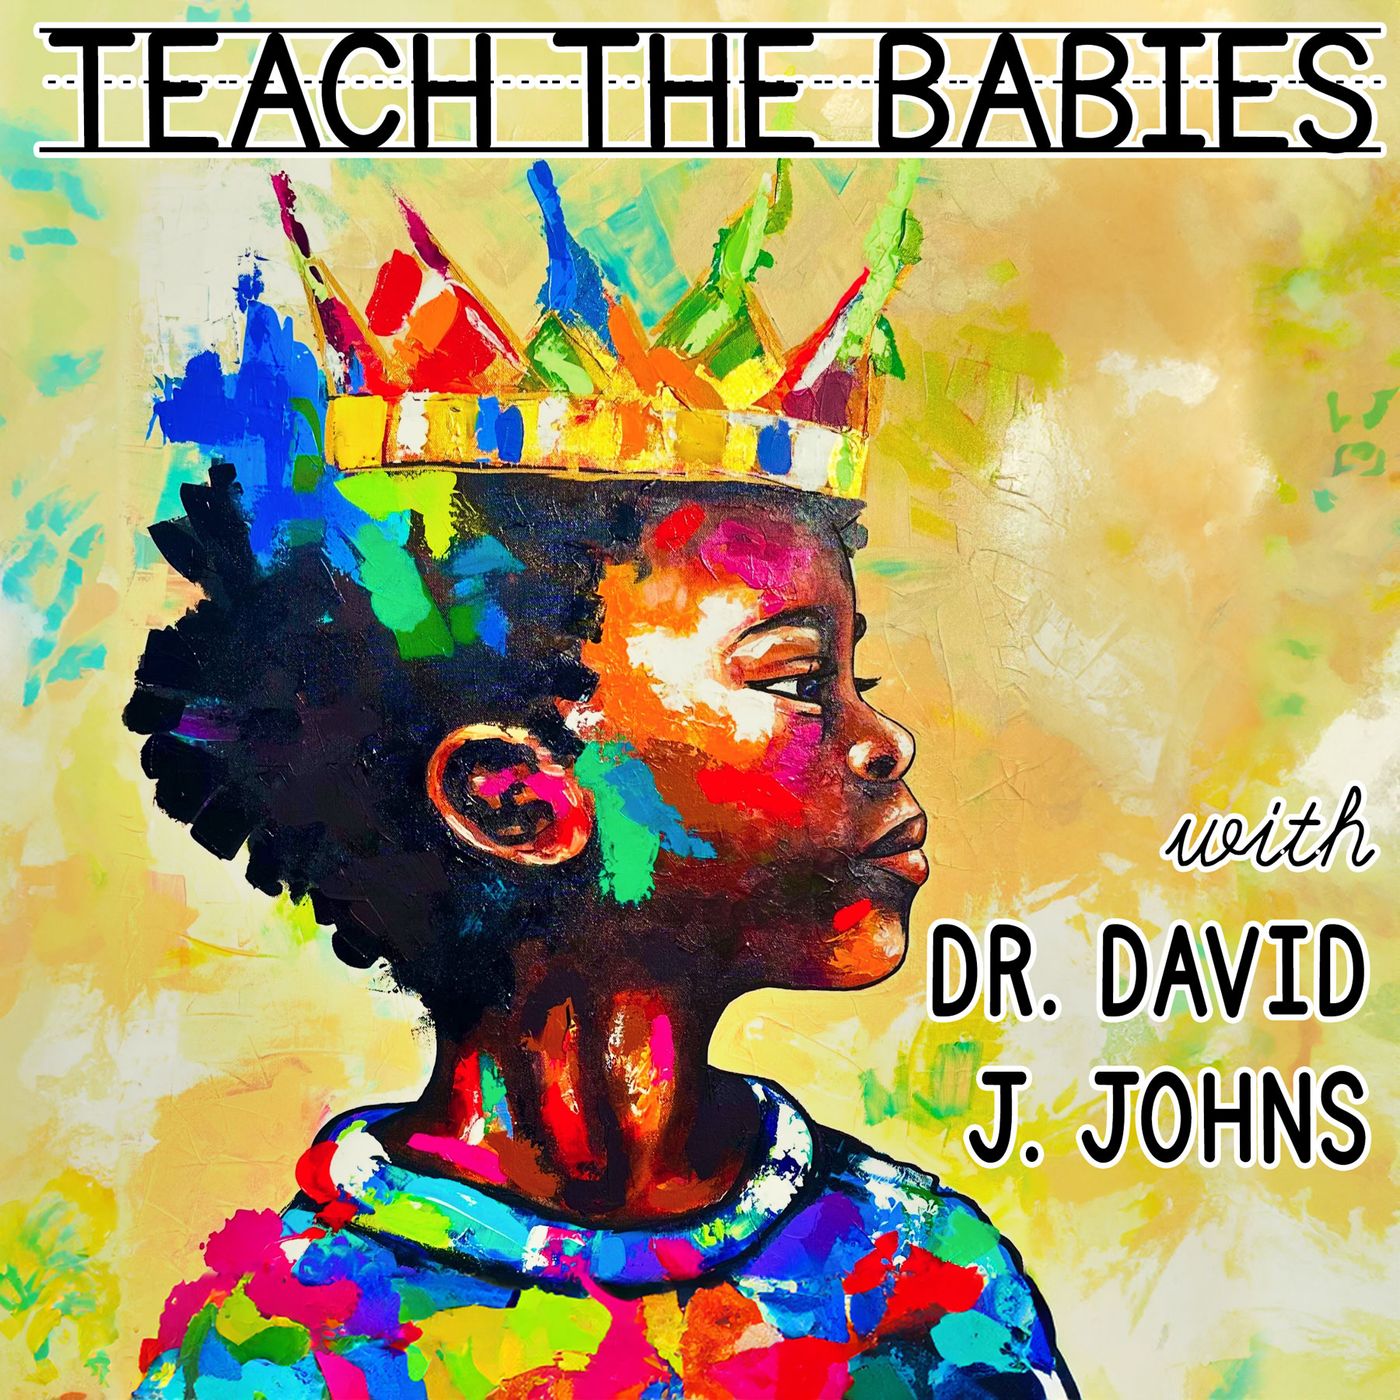 Teach the Babies w/ Dr. David J. Johns